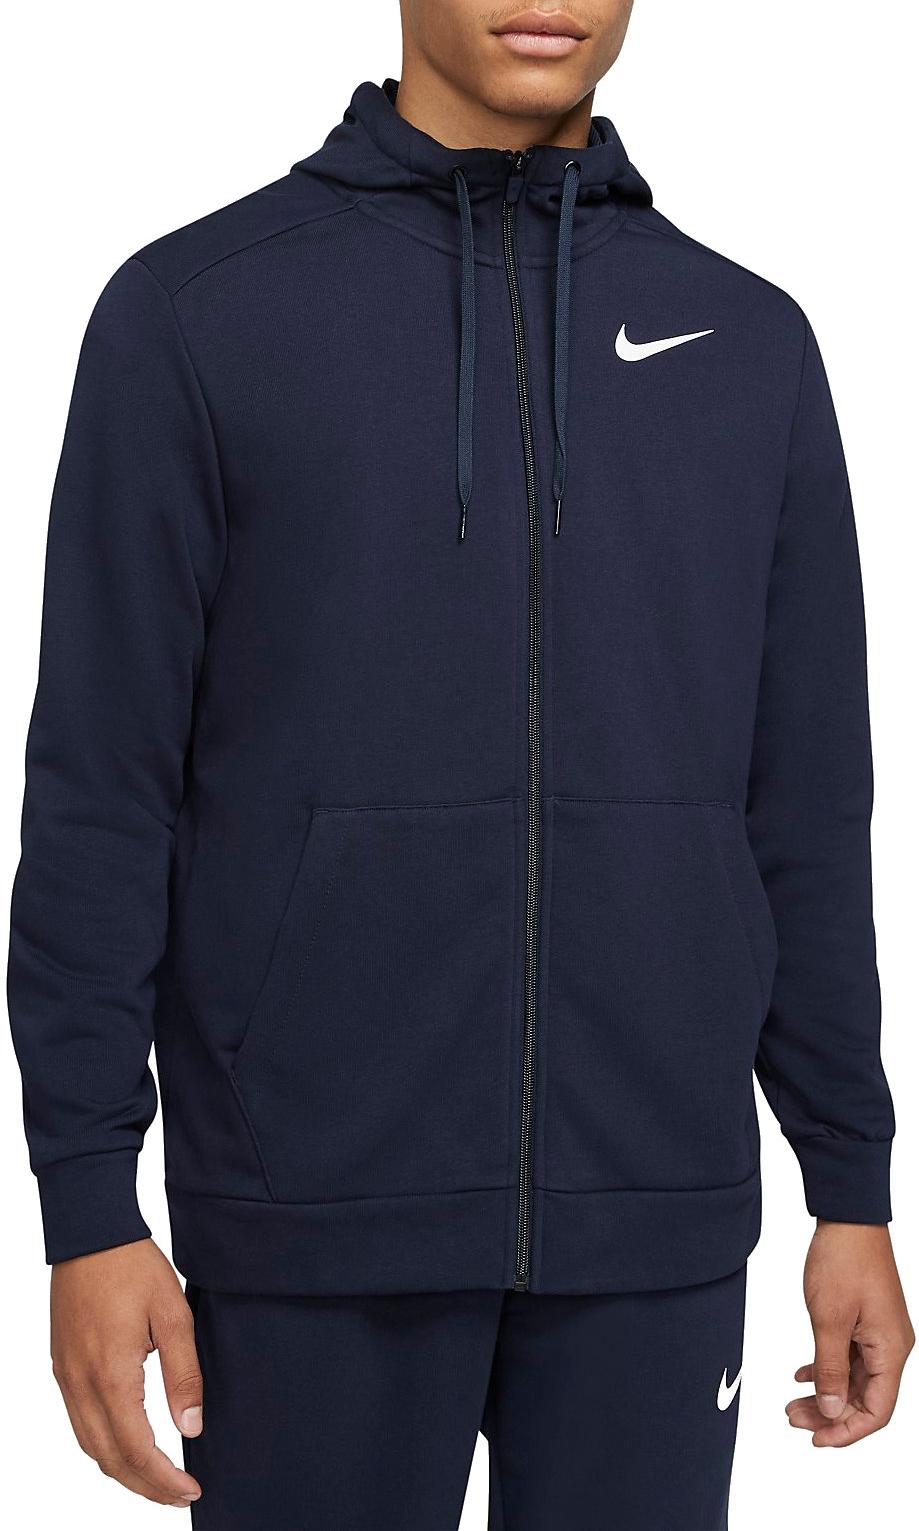 Hooded sweatshirt Nike Dri-FIT